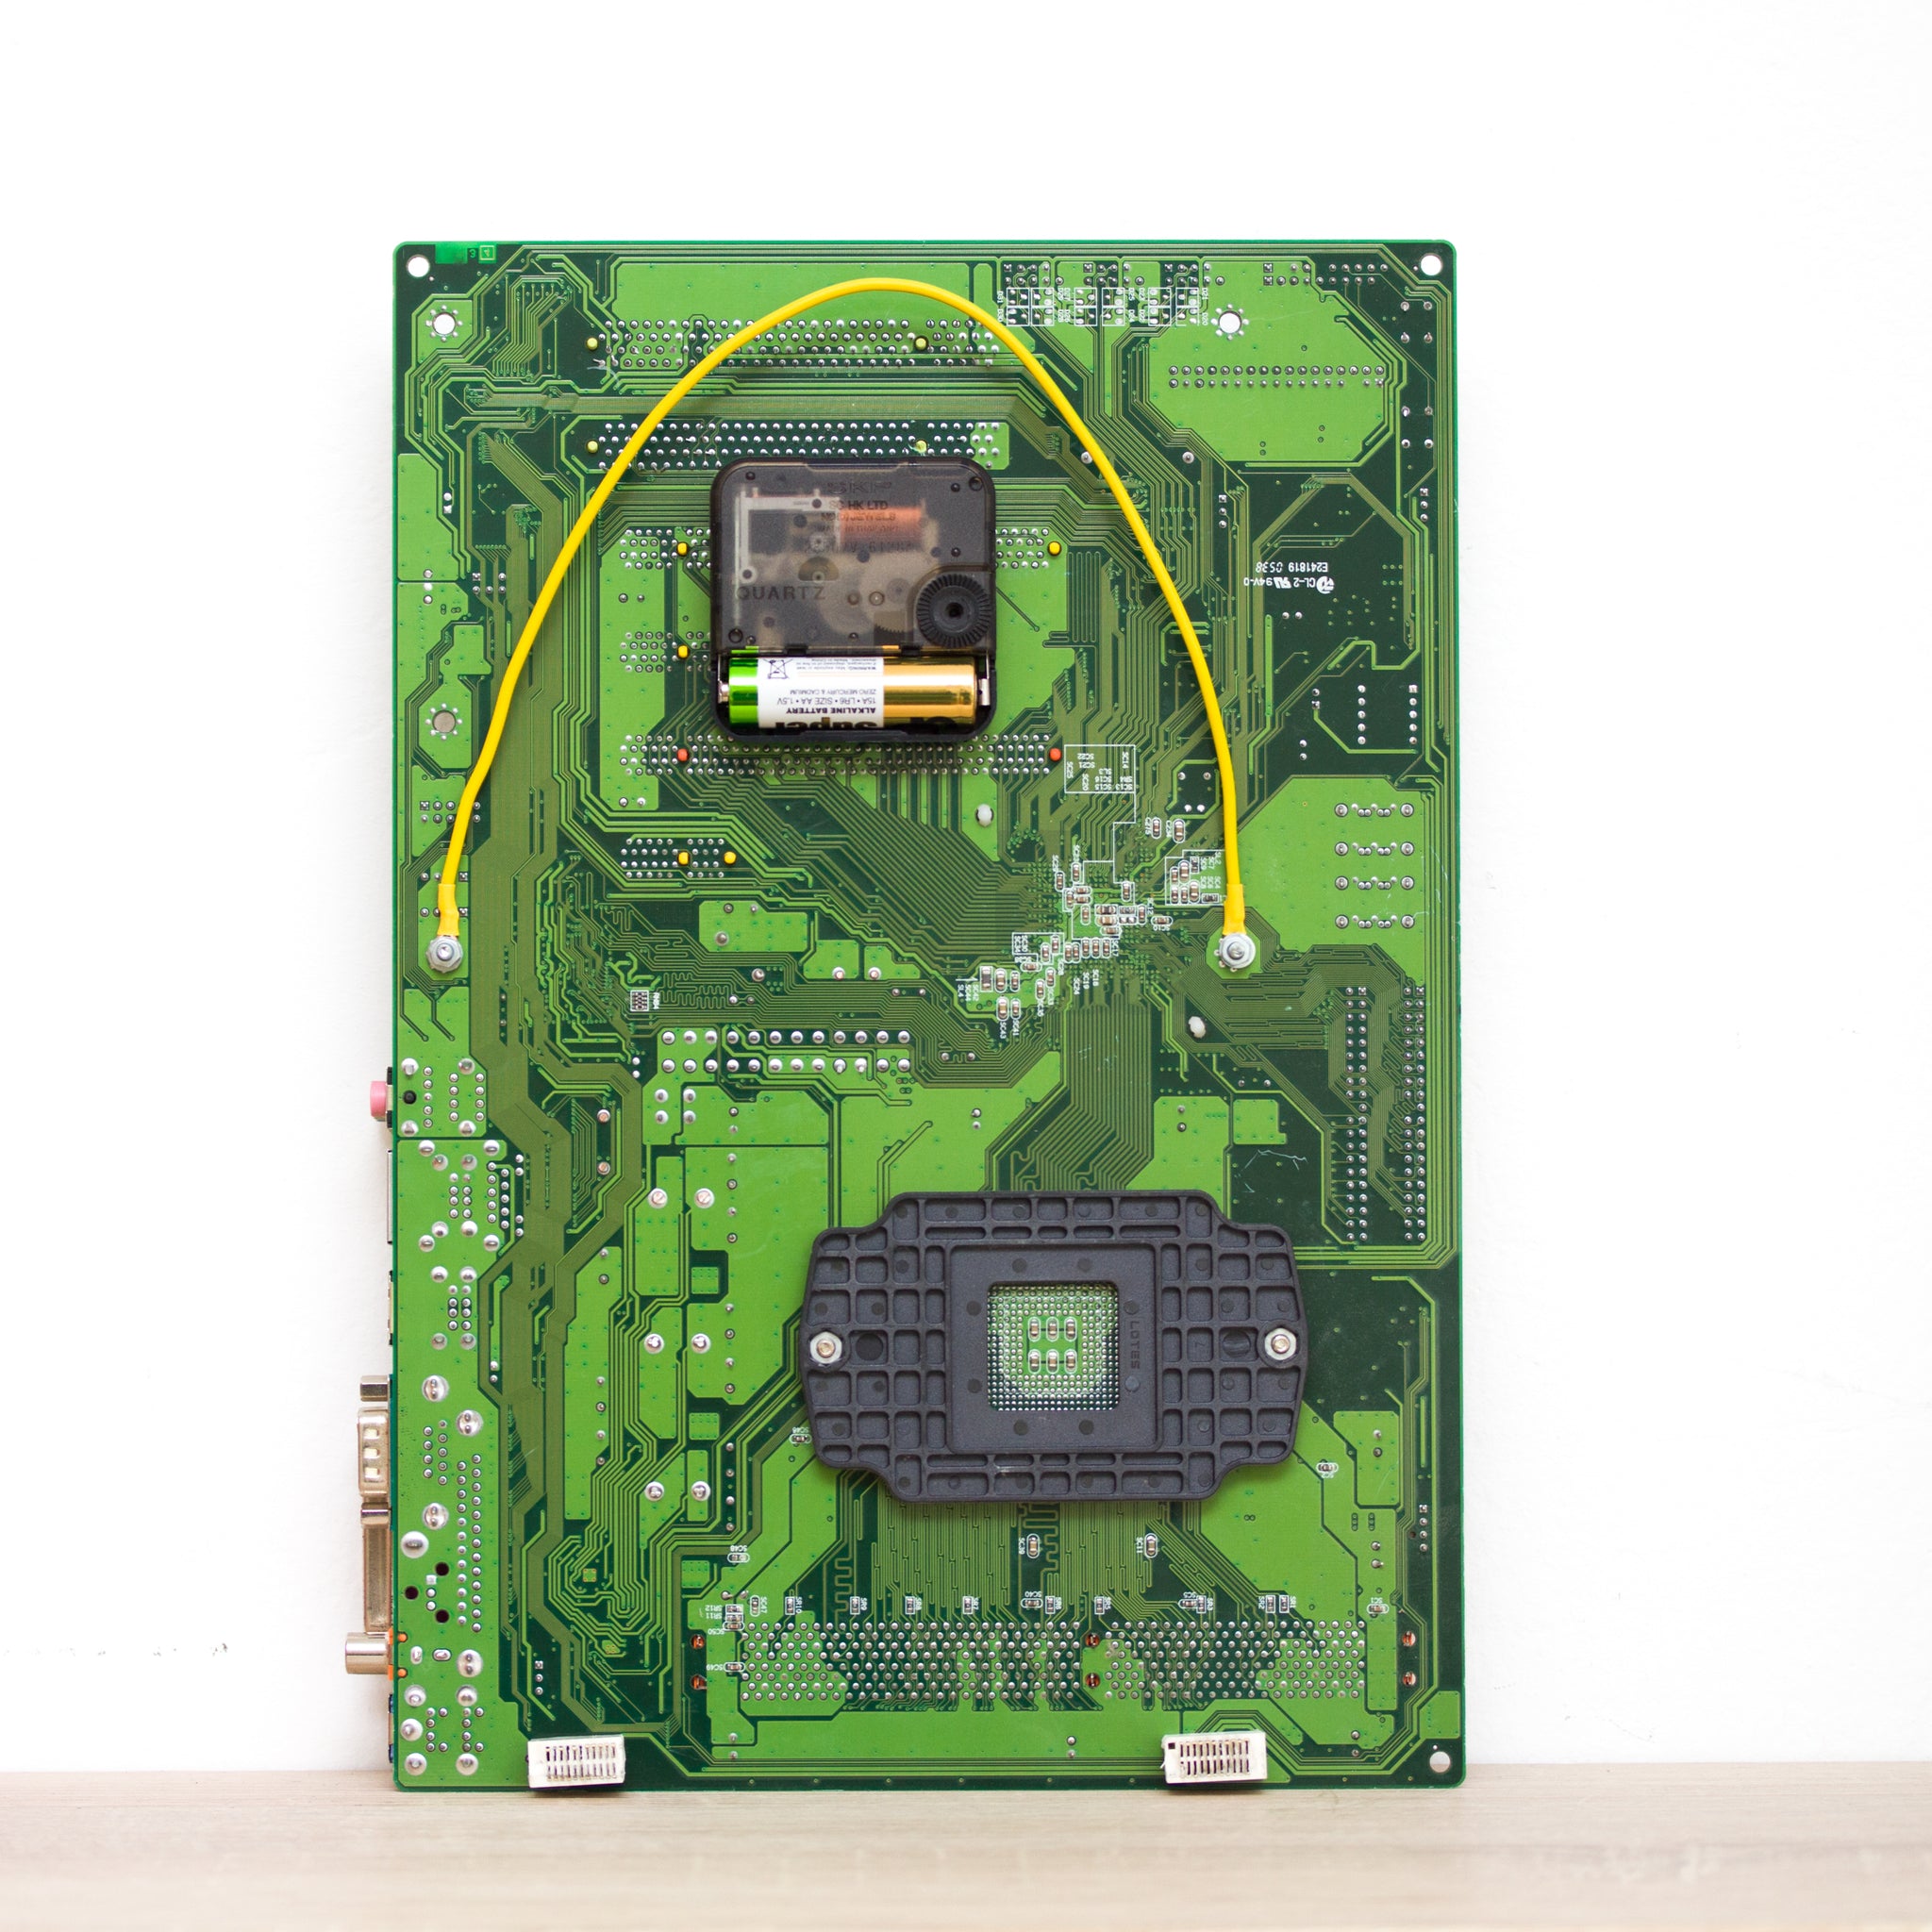 Geeky Wall Clock made of green circuit board